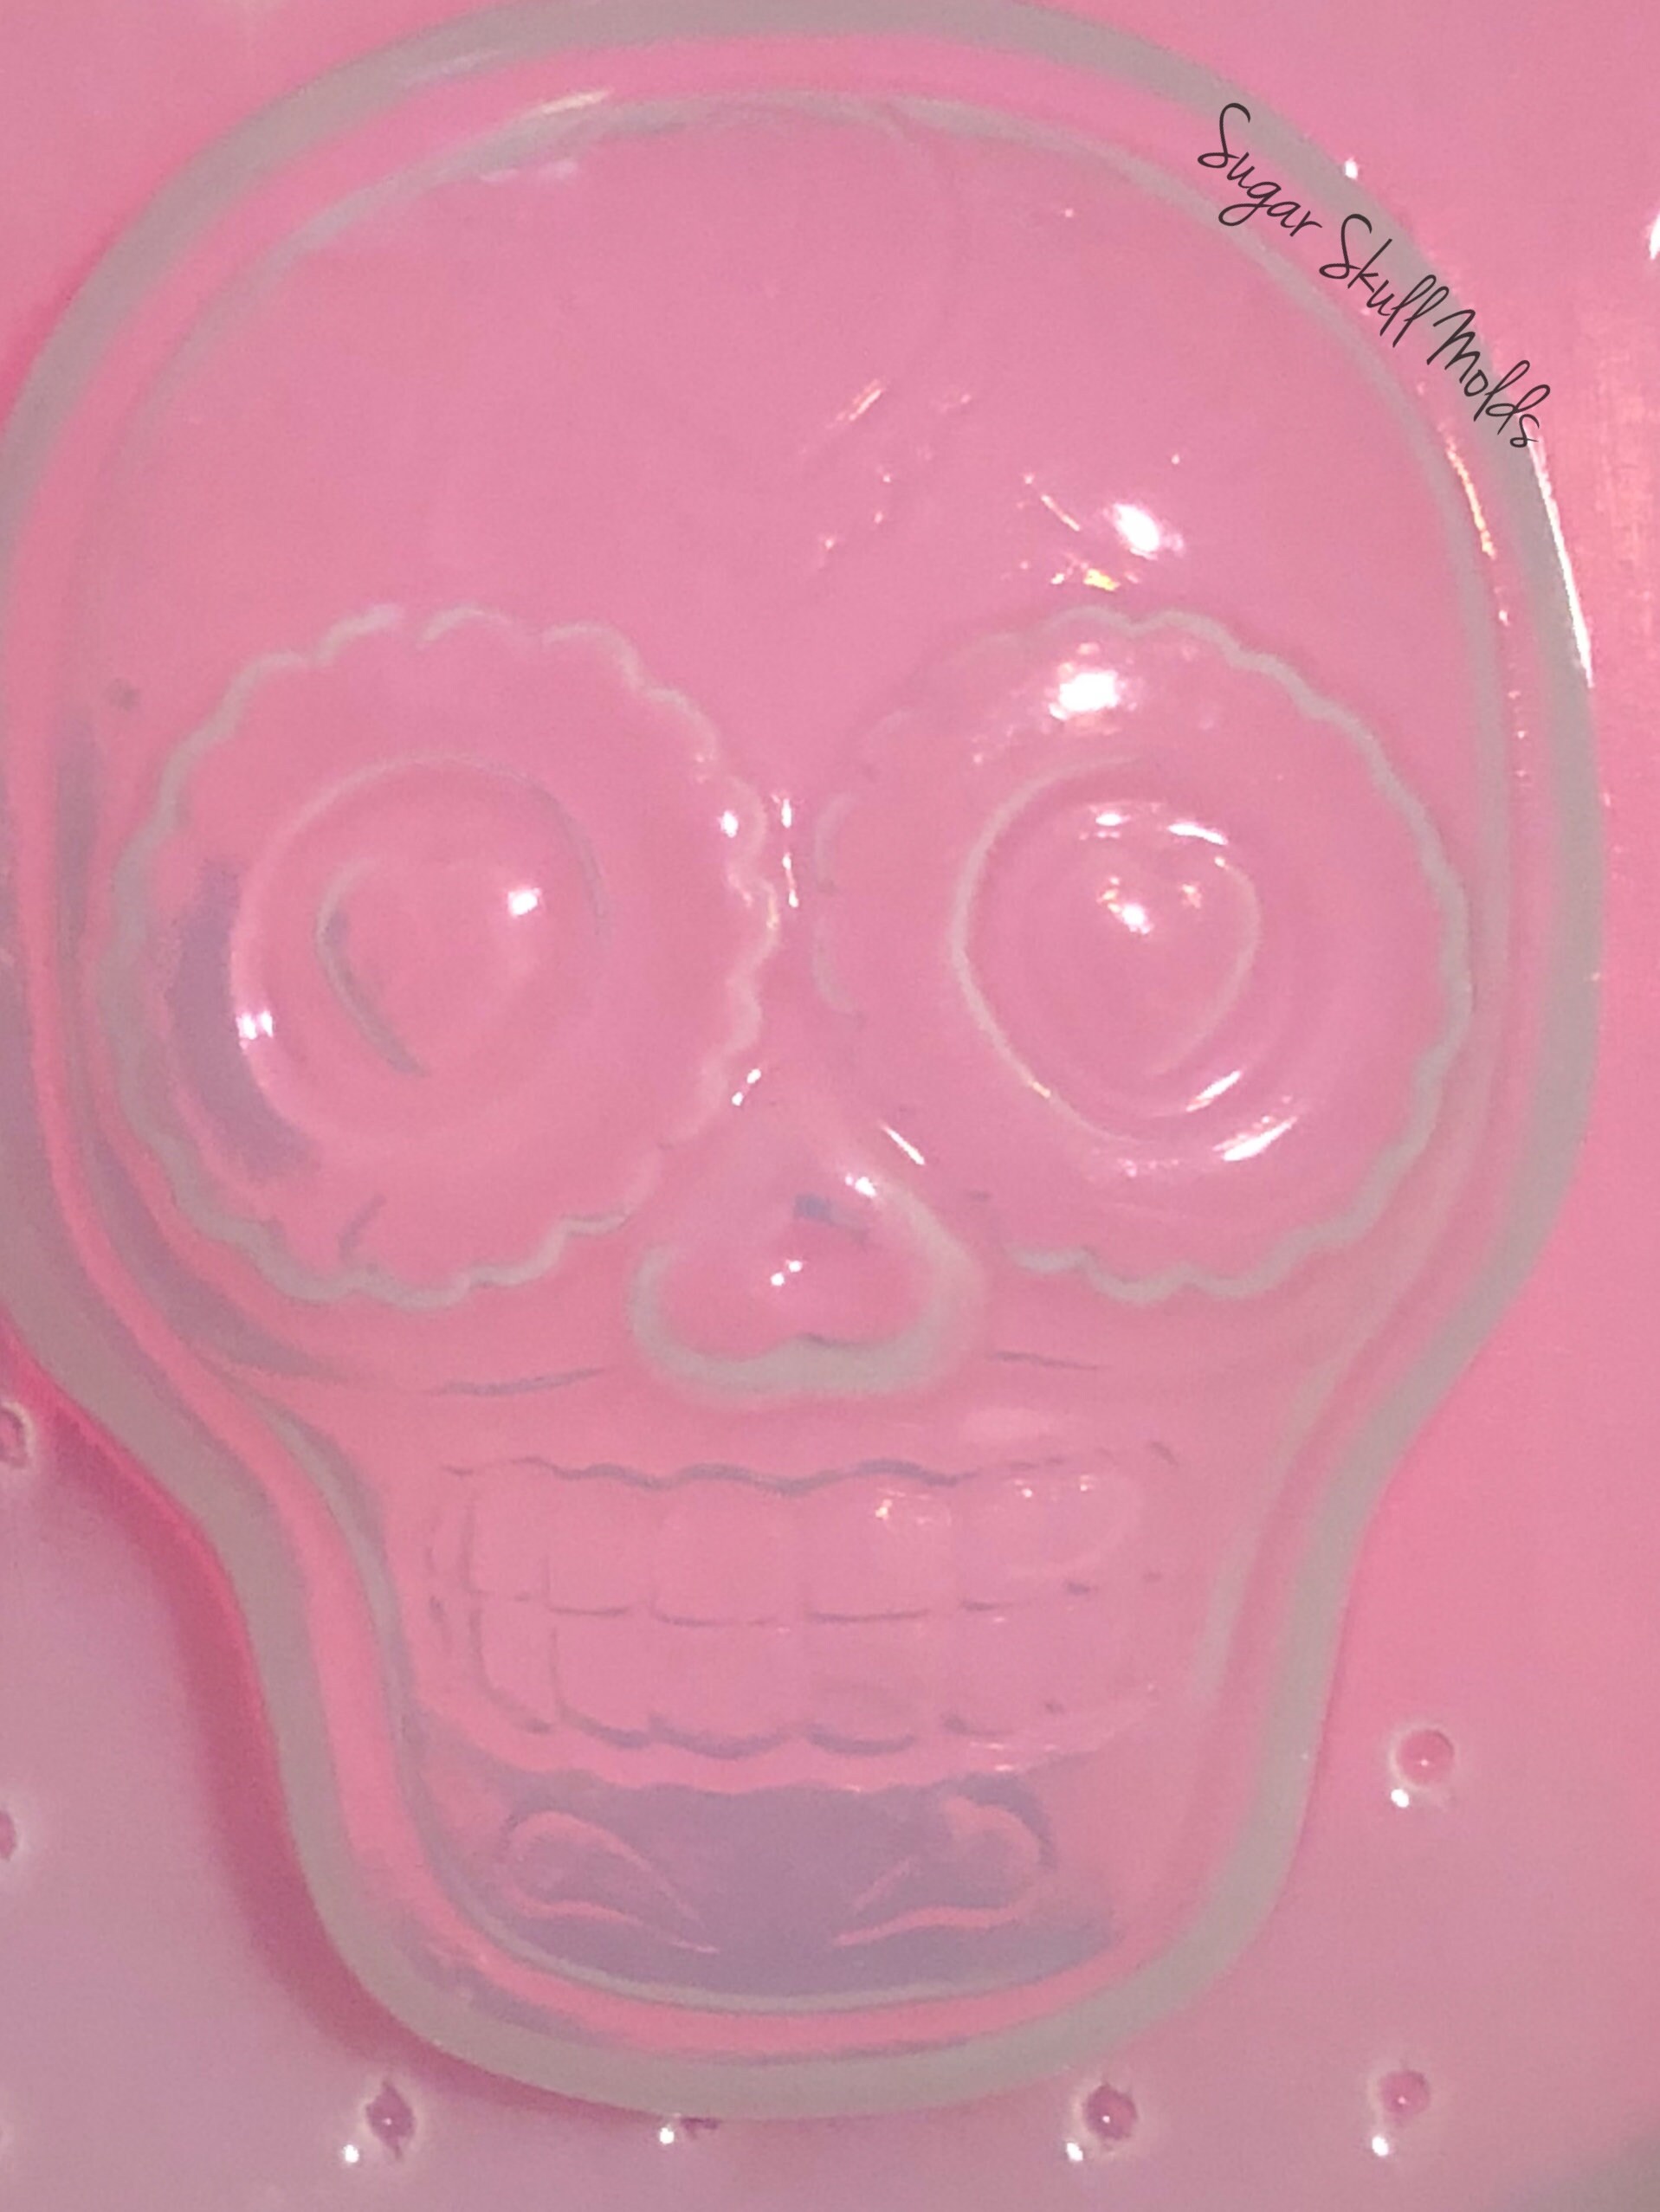 Smiley Sugar Skull Face With Heart Eyes Flexible Plastic Mold | Etsy